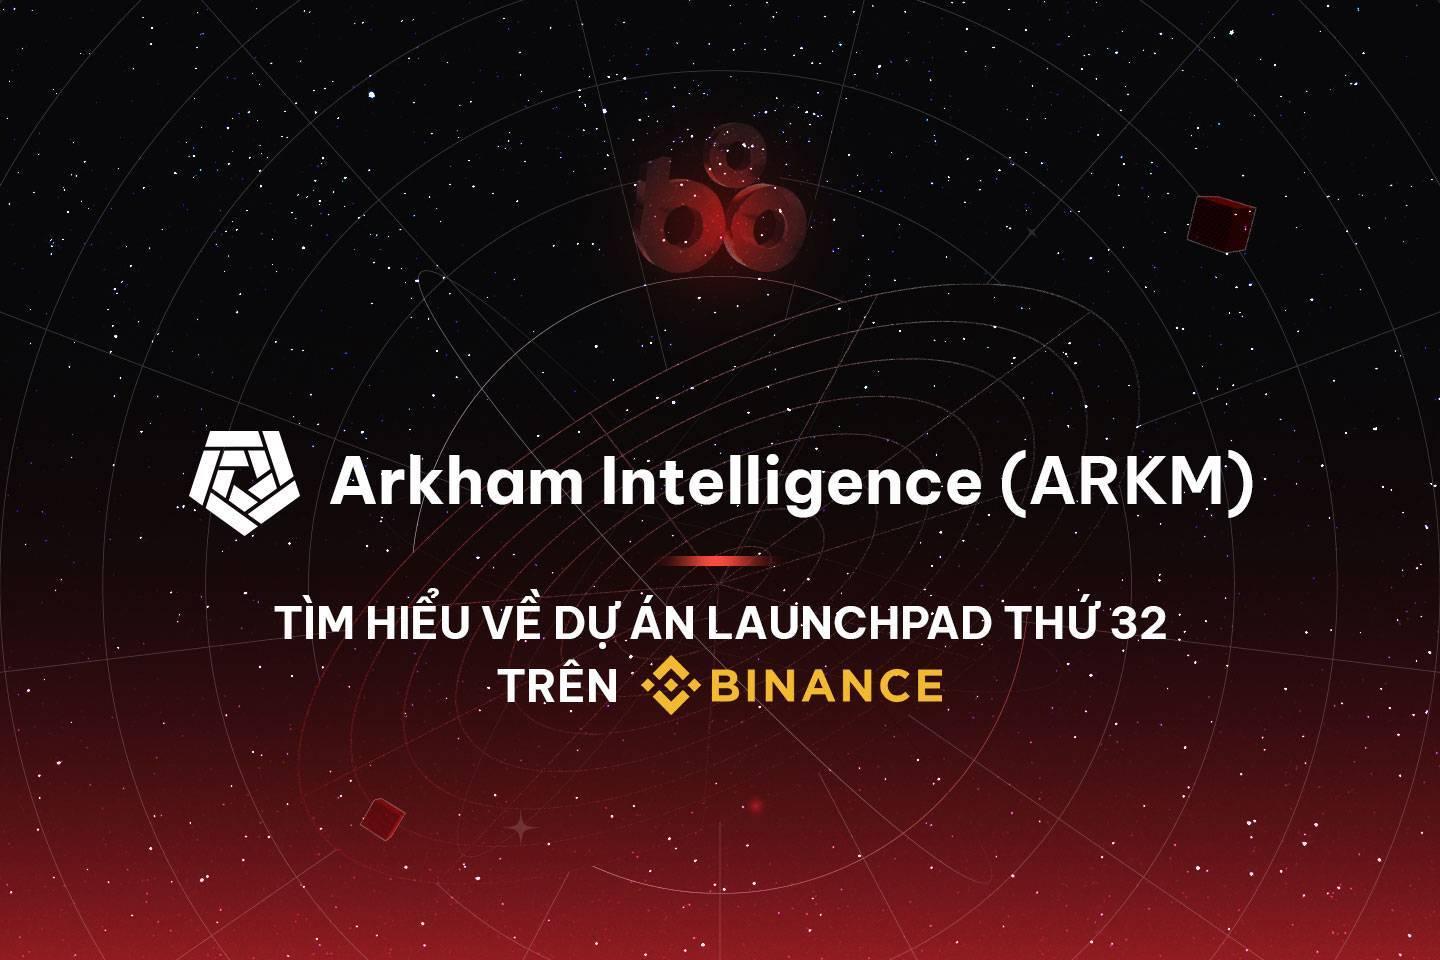 arkham-intelligence-arkm-tim-hieu-ve-du-an-launchpad-thu-32-tren-binance